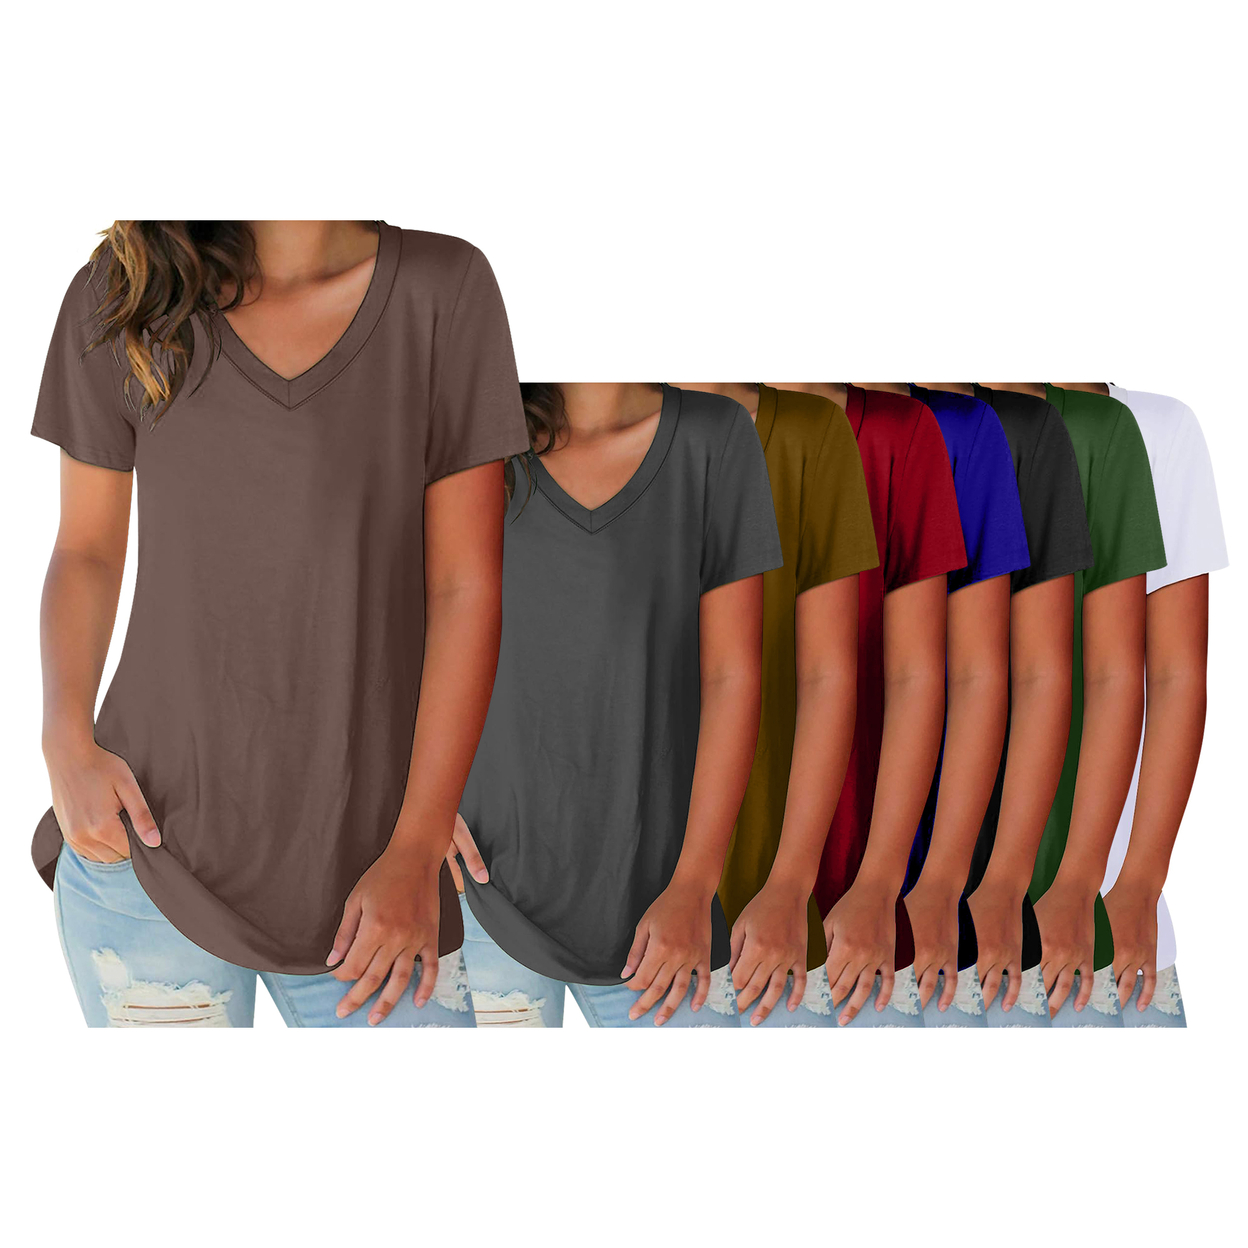 3-Pack: Women's Ultra Soft Smooth Cotton Blend Basic V-Neck Short Sleeve Shirts - Black Grey, Red, X-large